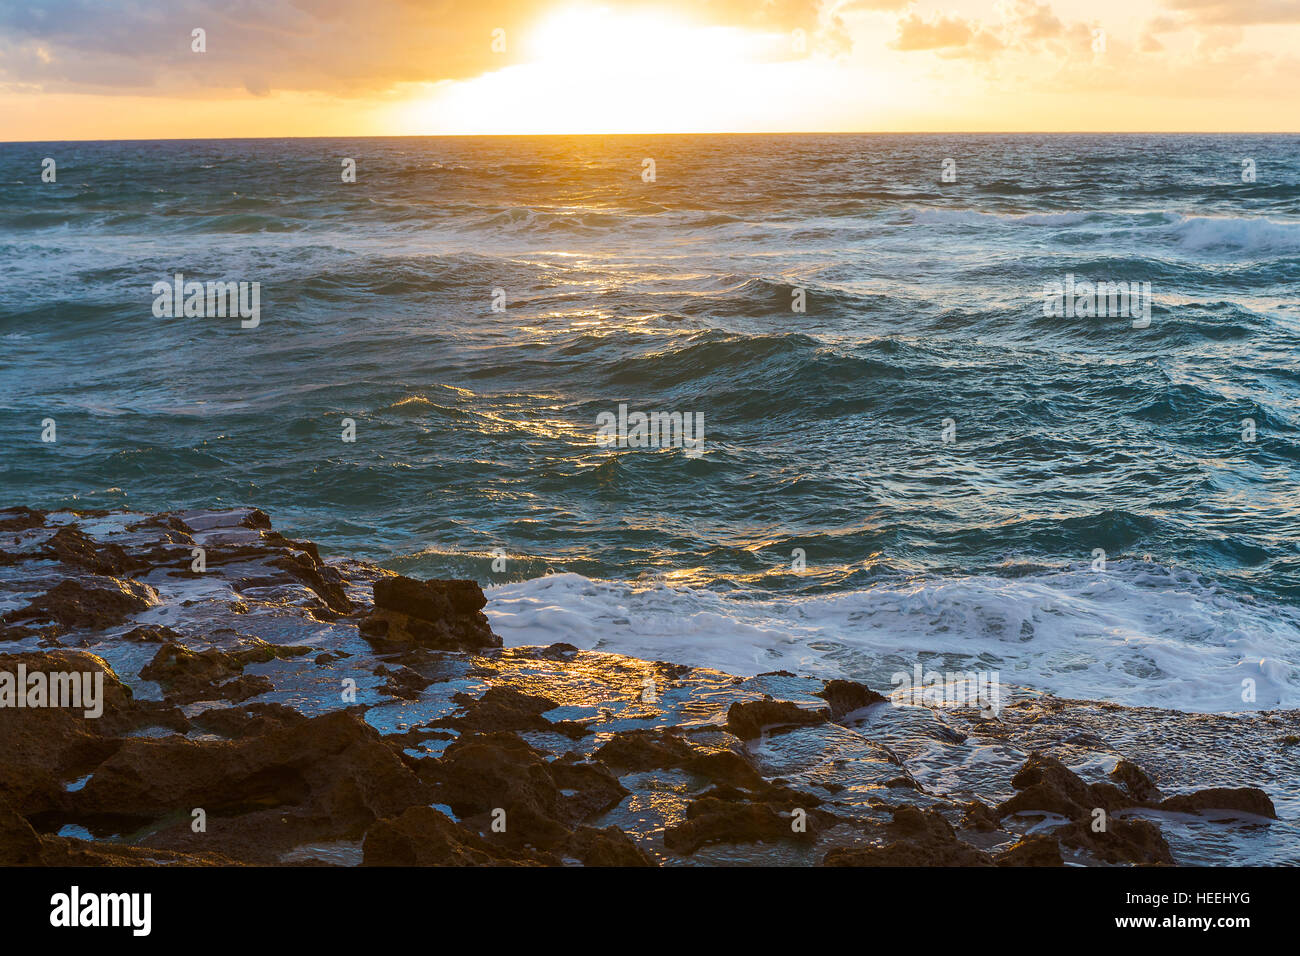 Sunset over ocean, Atlantic ocean shore, Cape Spartel near Tangier, Morocco Stock Photo